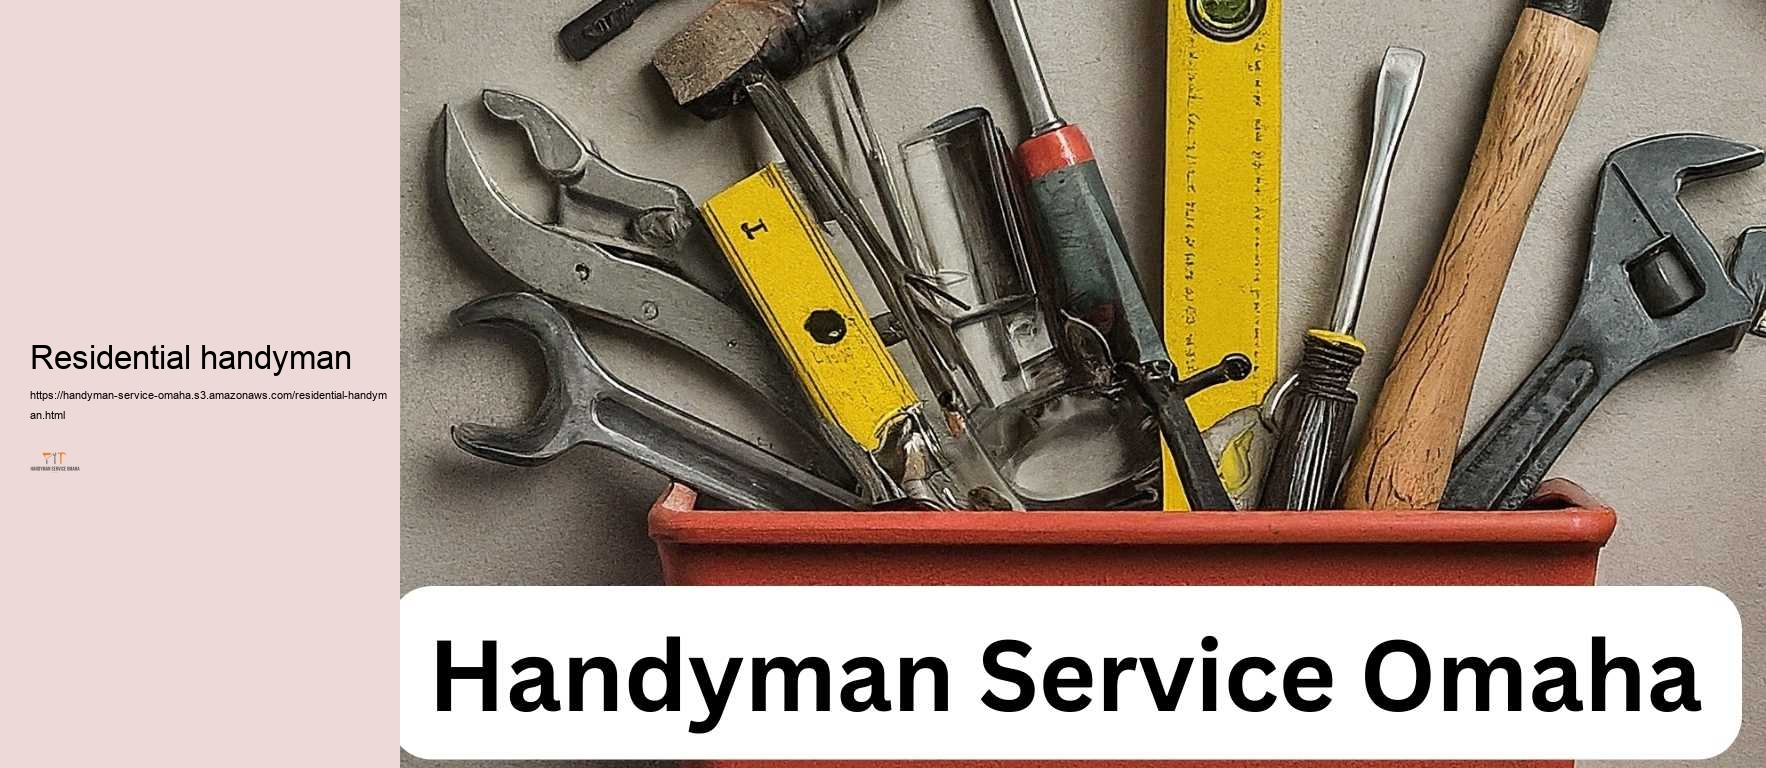 Residential handyman